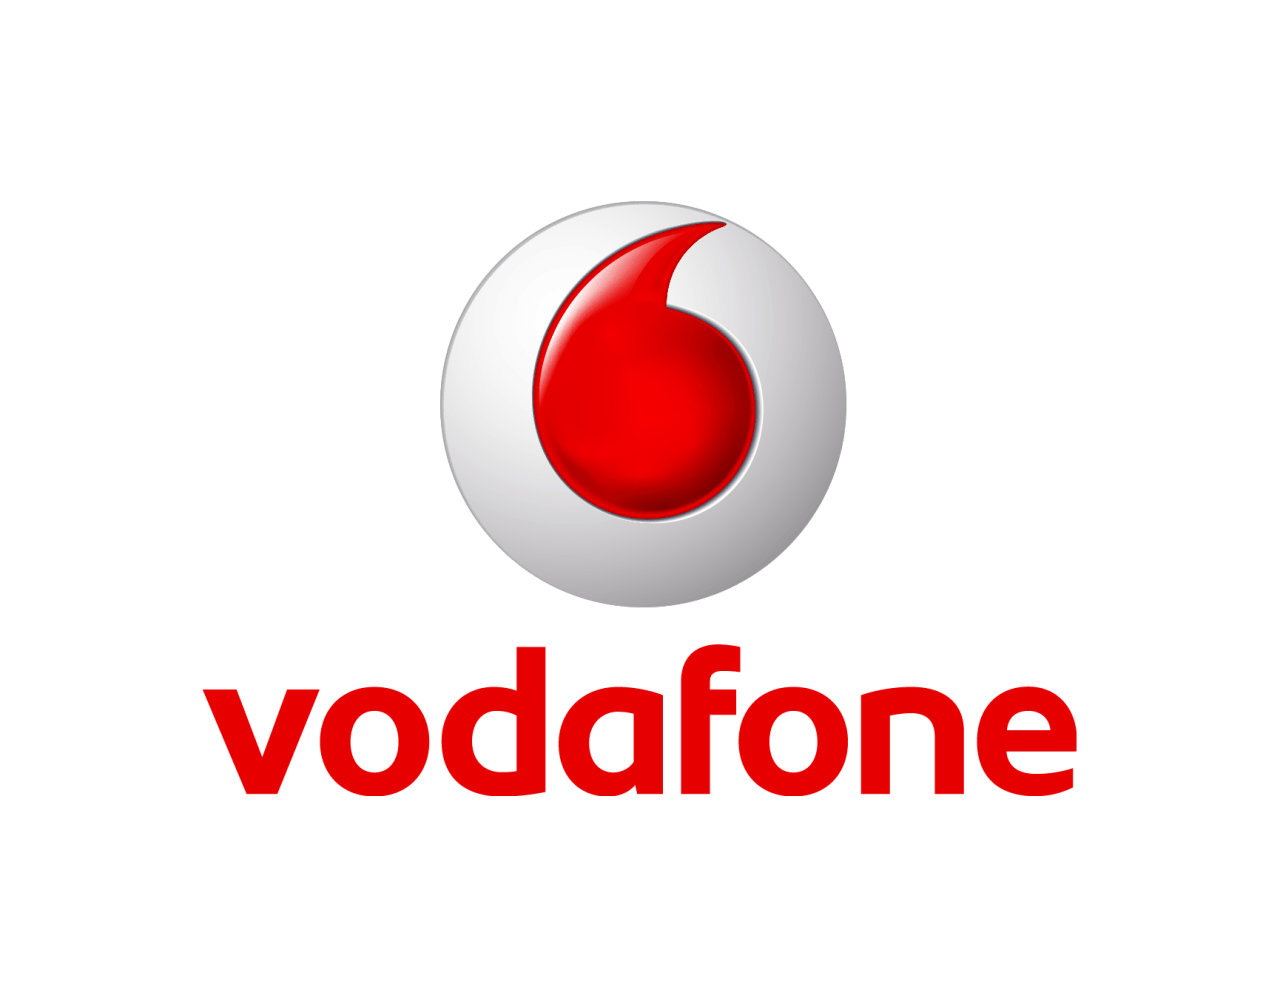 iPhone 7 Vodafone plans